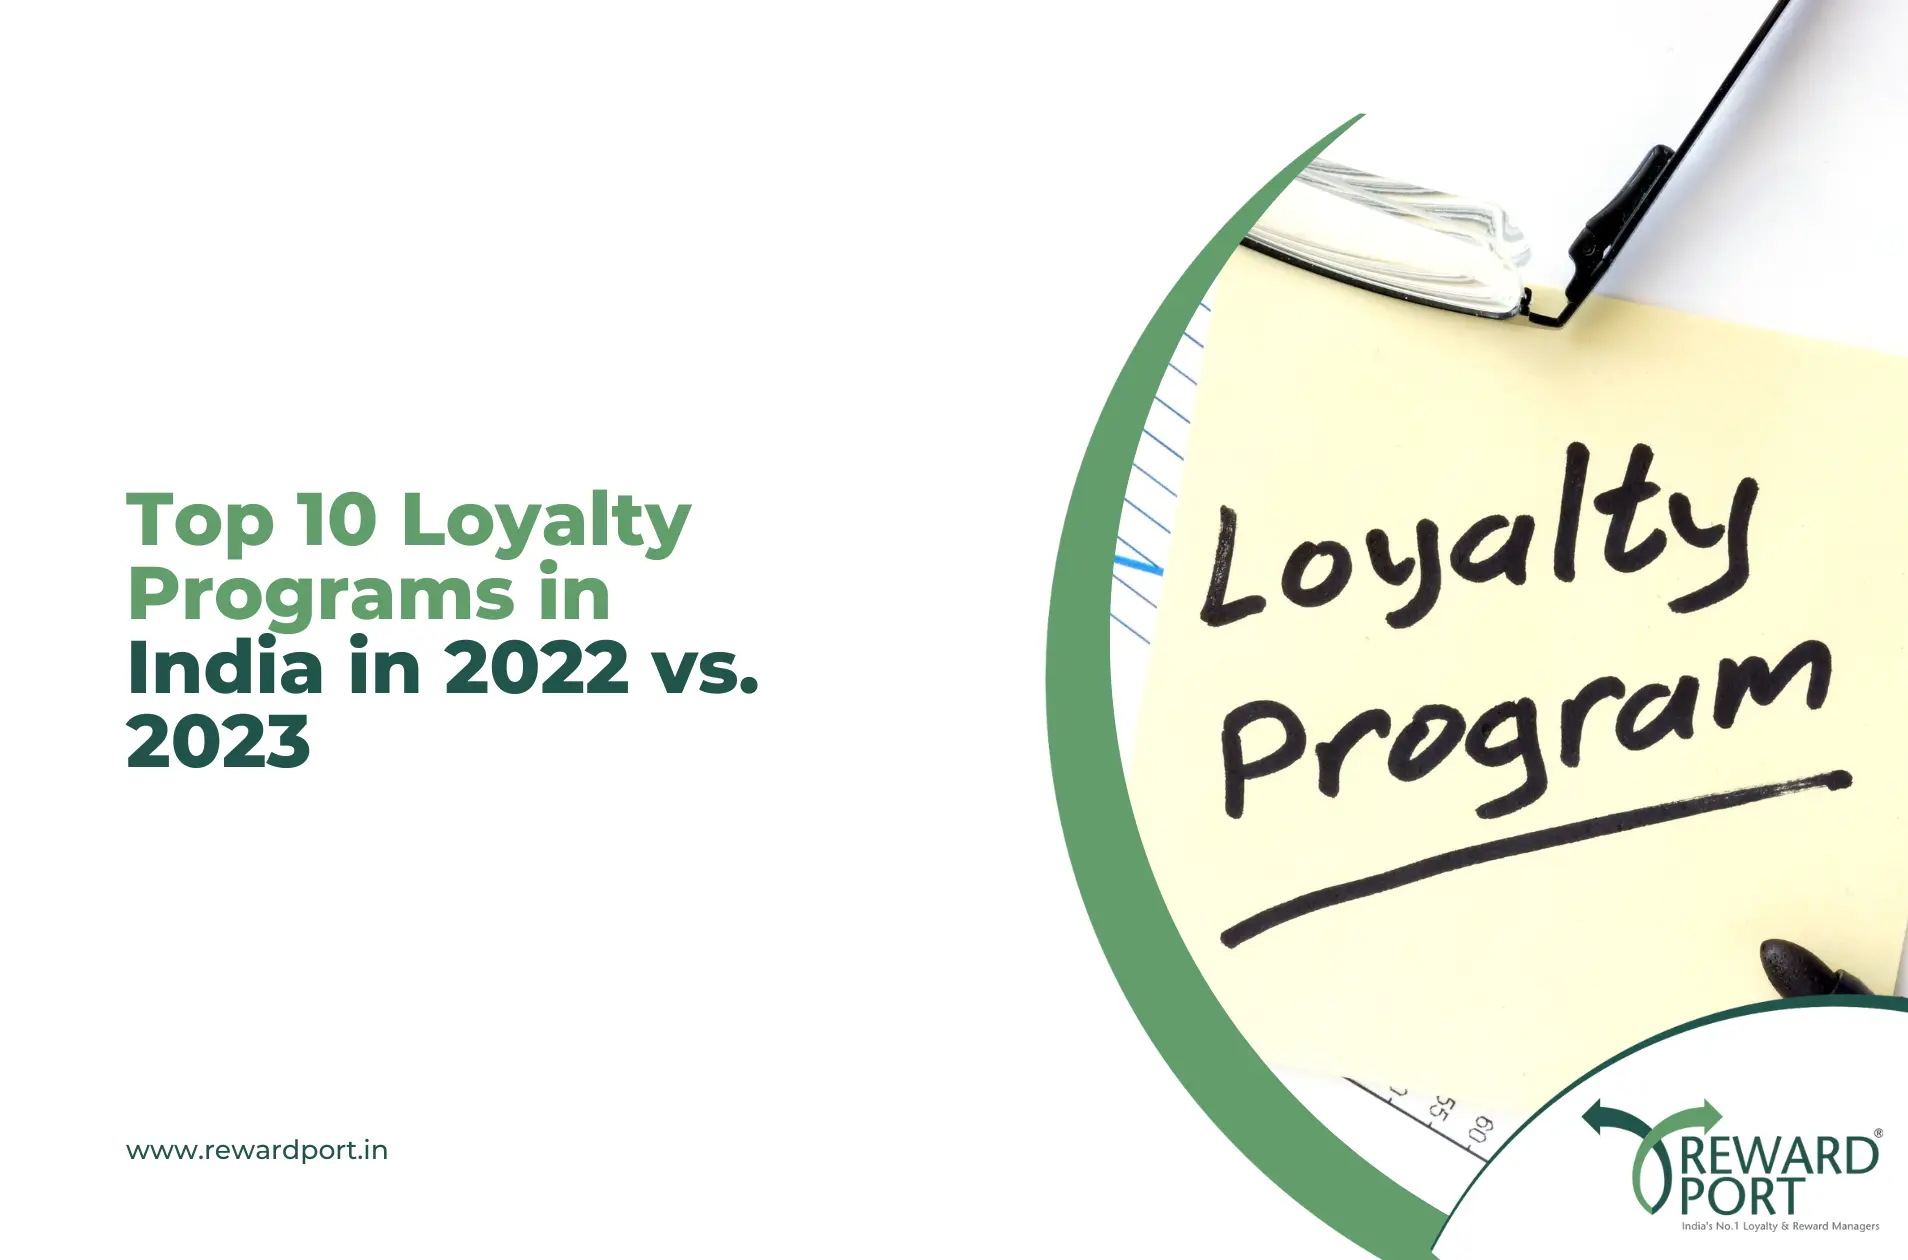 Top 10 Customer Loyalty Programs of 2022